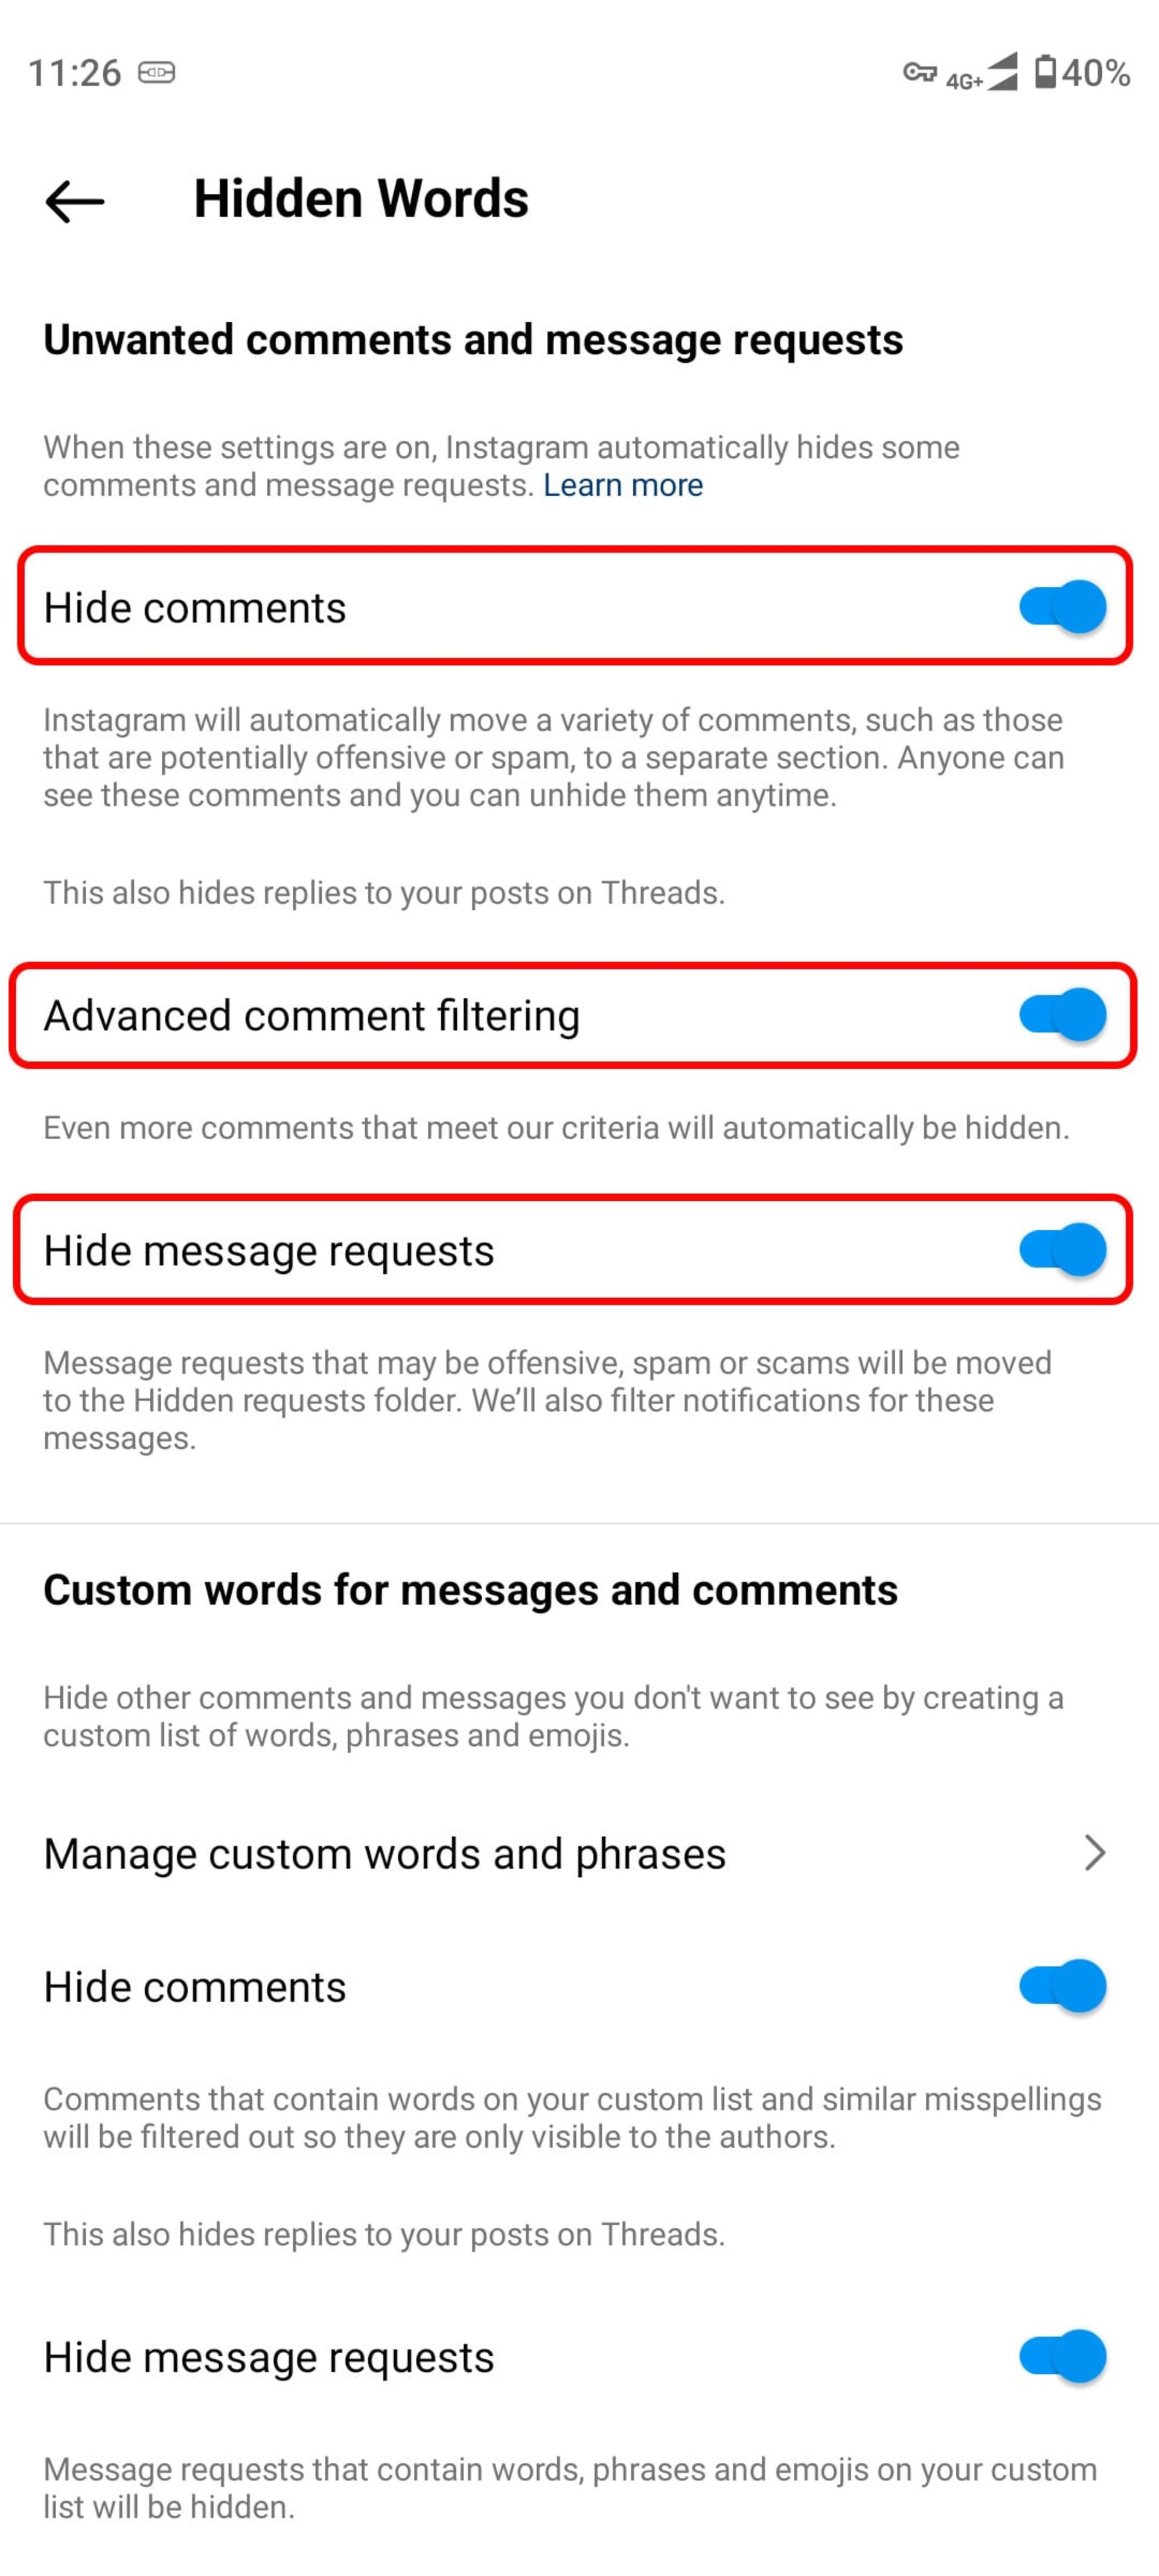 دکمه‌ های Hide comments و Advanced comment filtering و Hide message requests